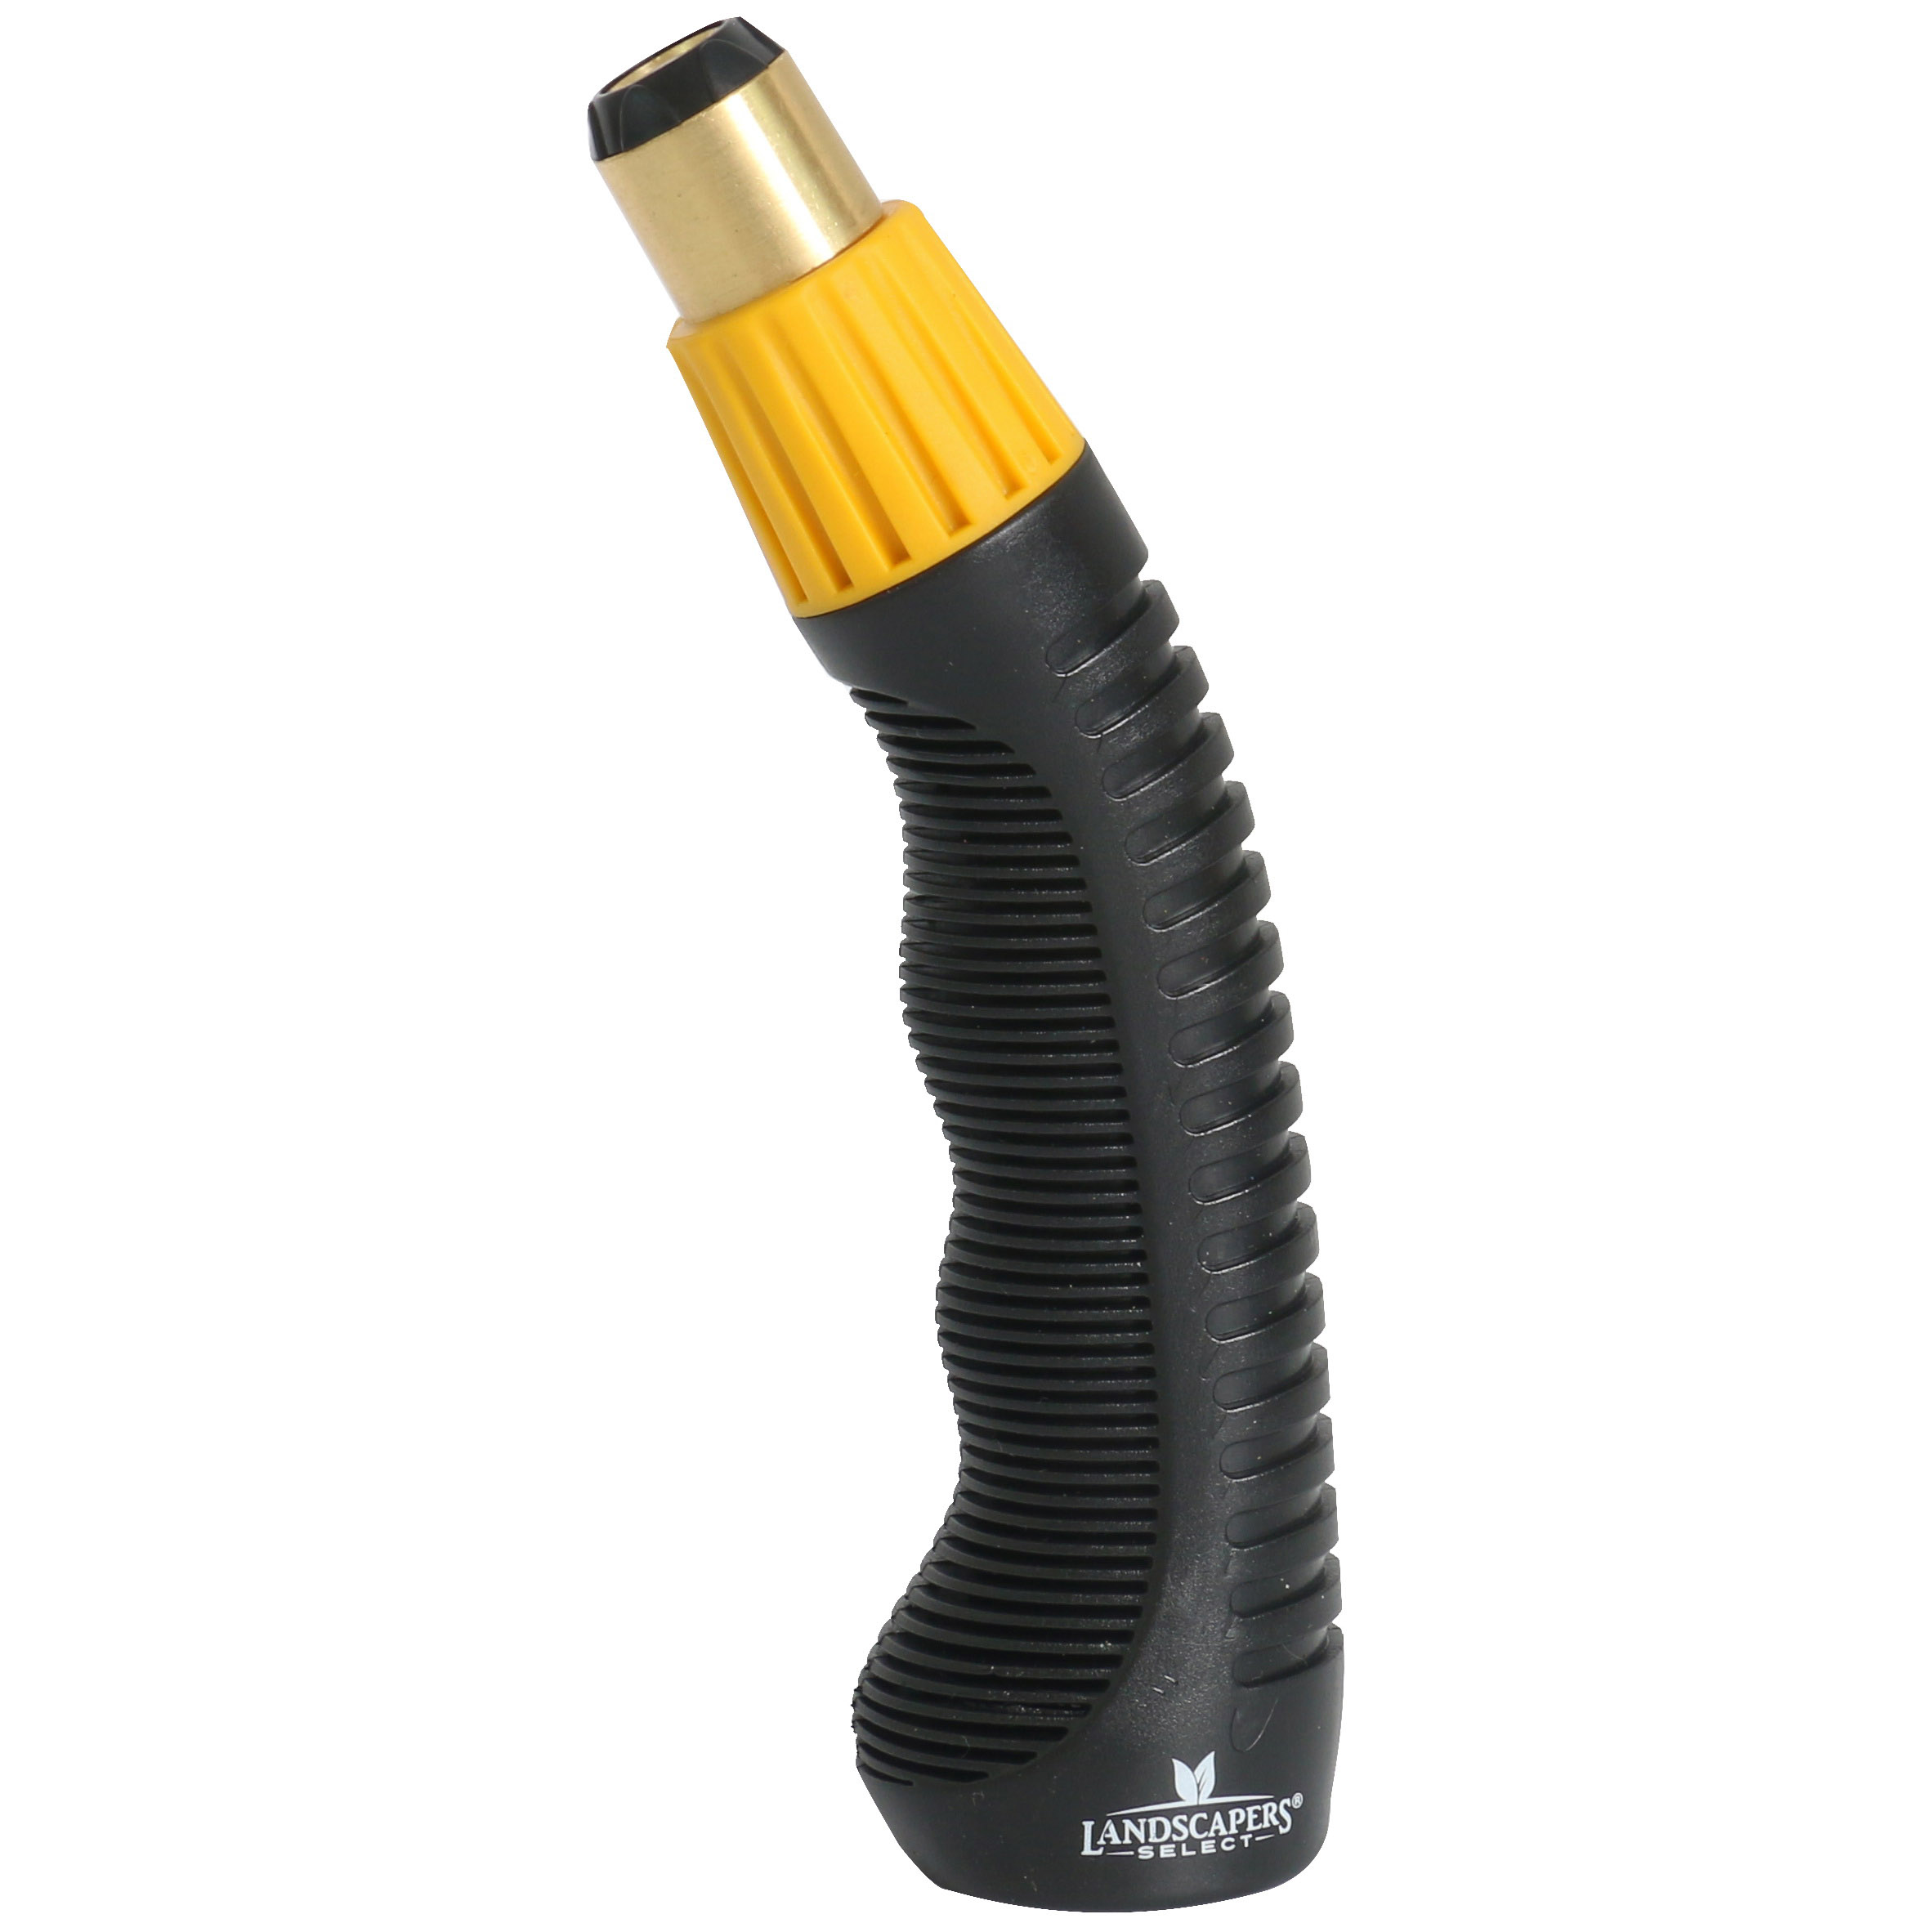 YM72033L Spray Nozzle, Female, Brass, Black